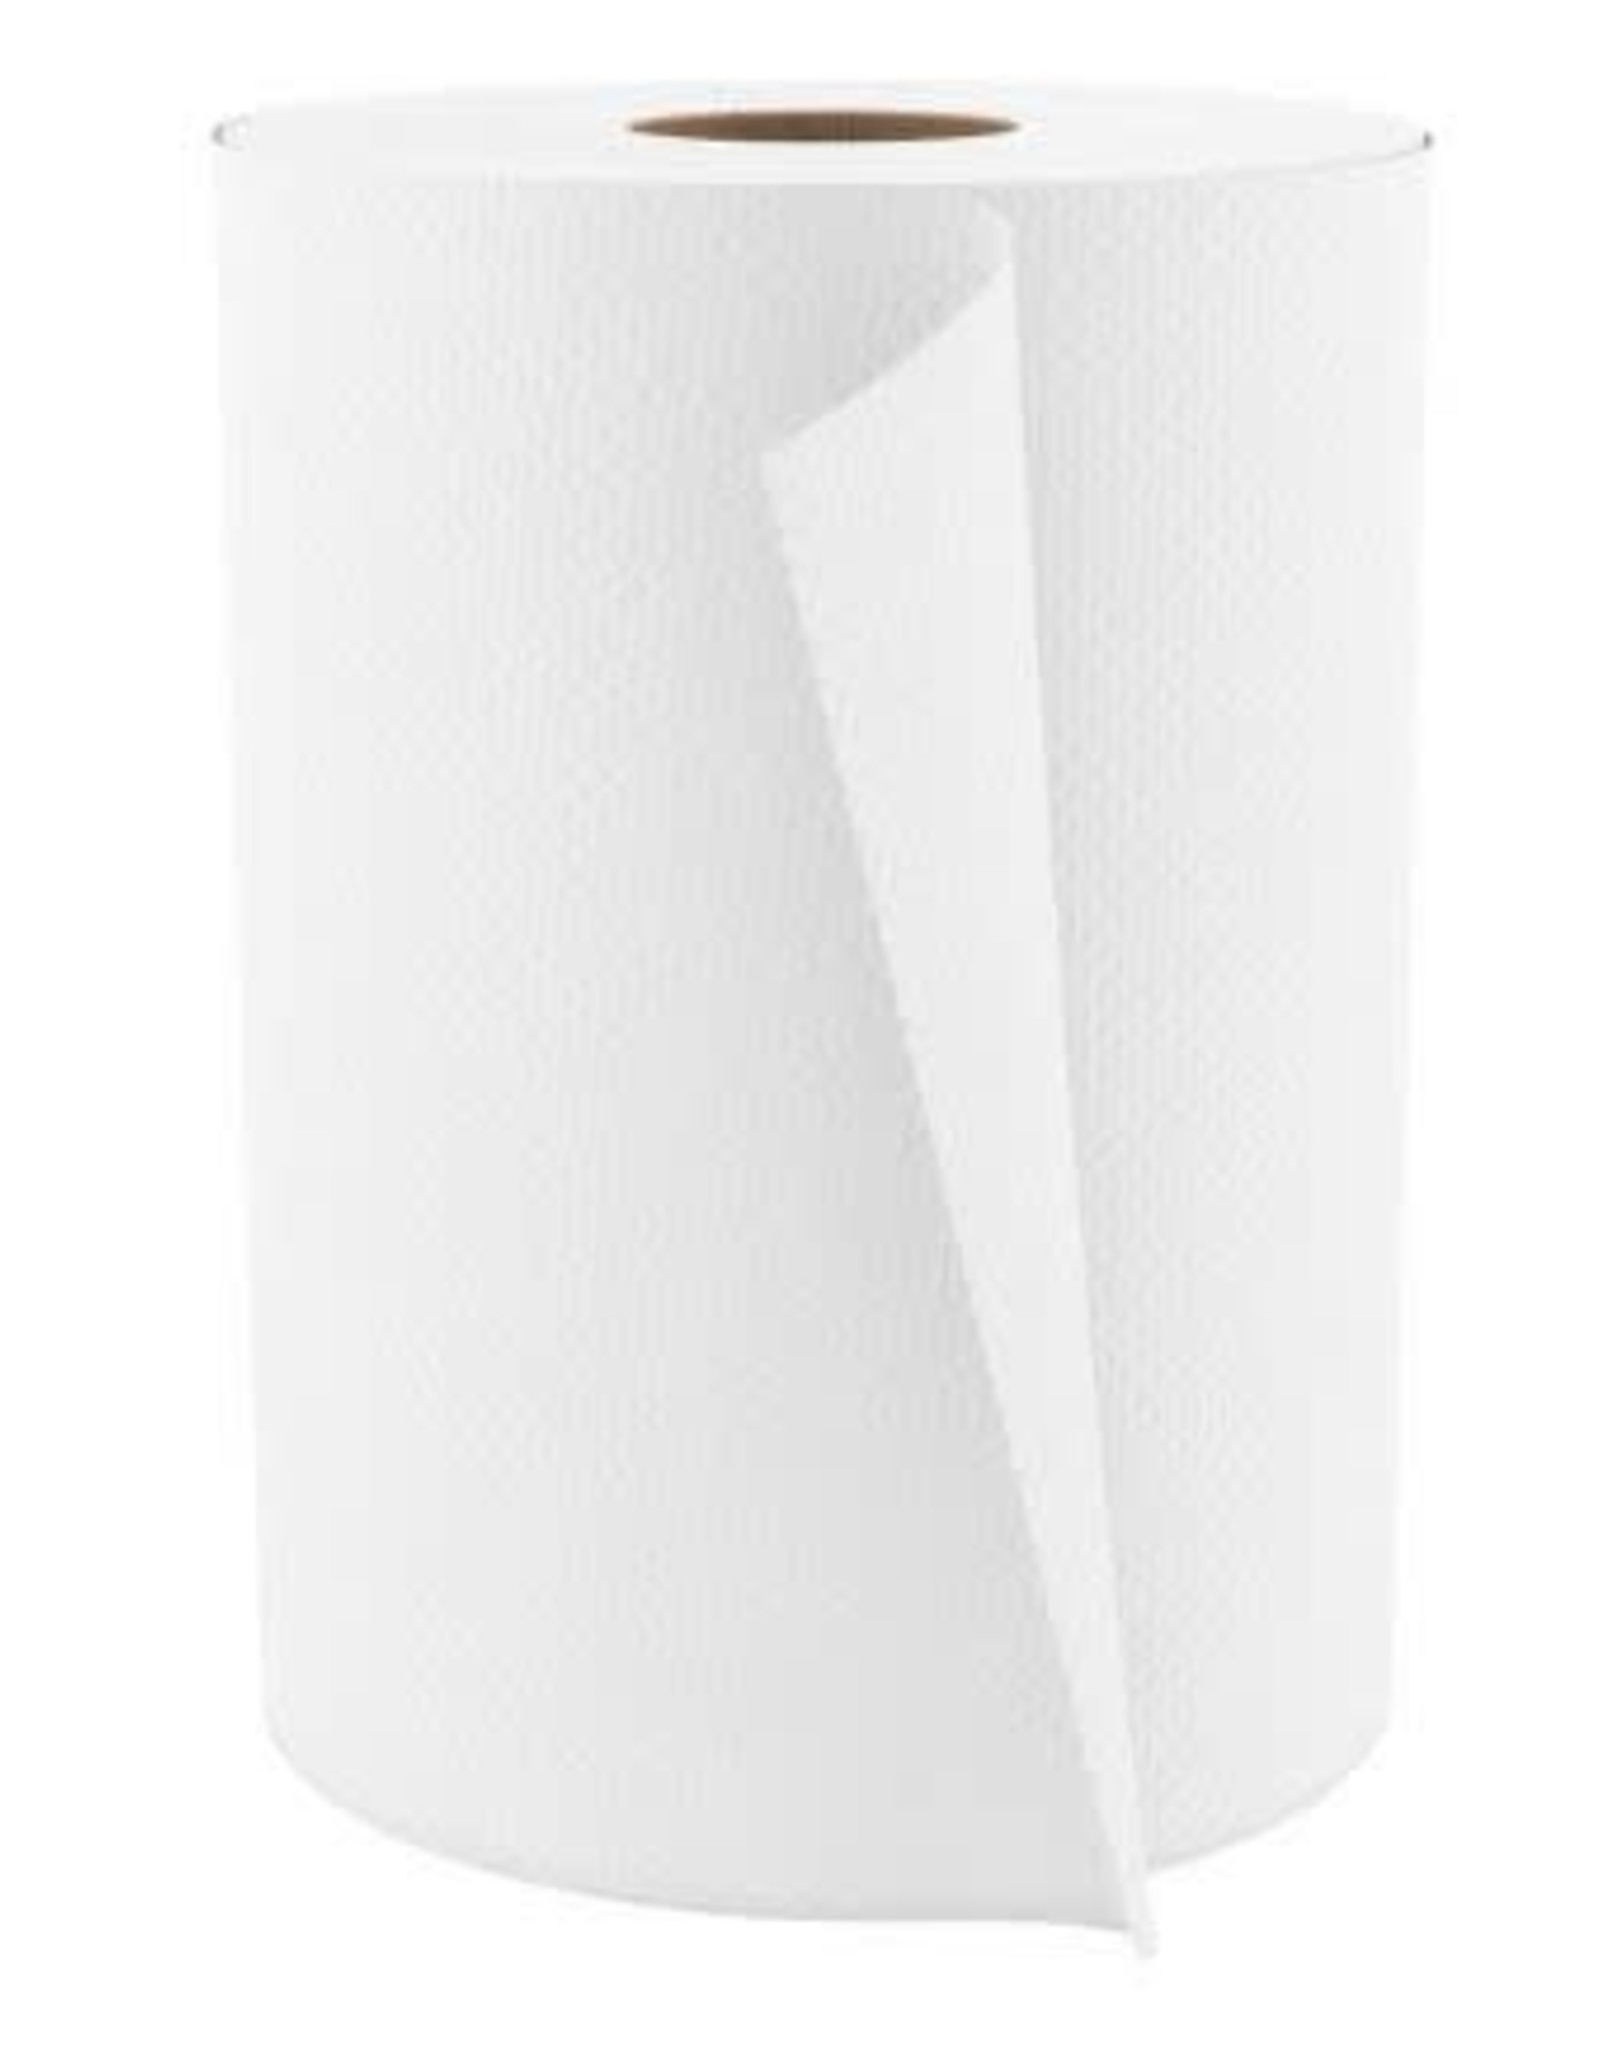 Cascade White Roll Towel, 350 ft, 12/Case